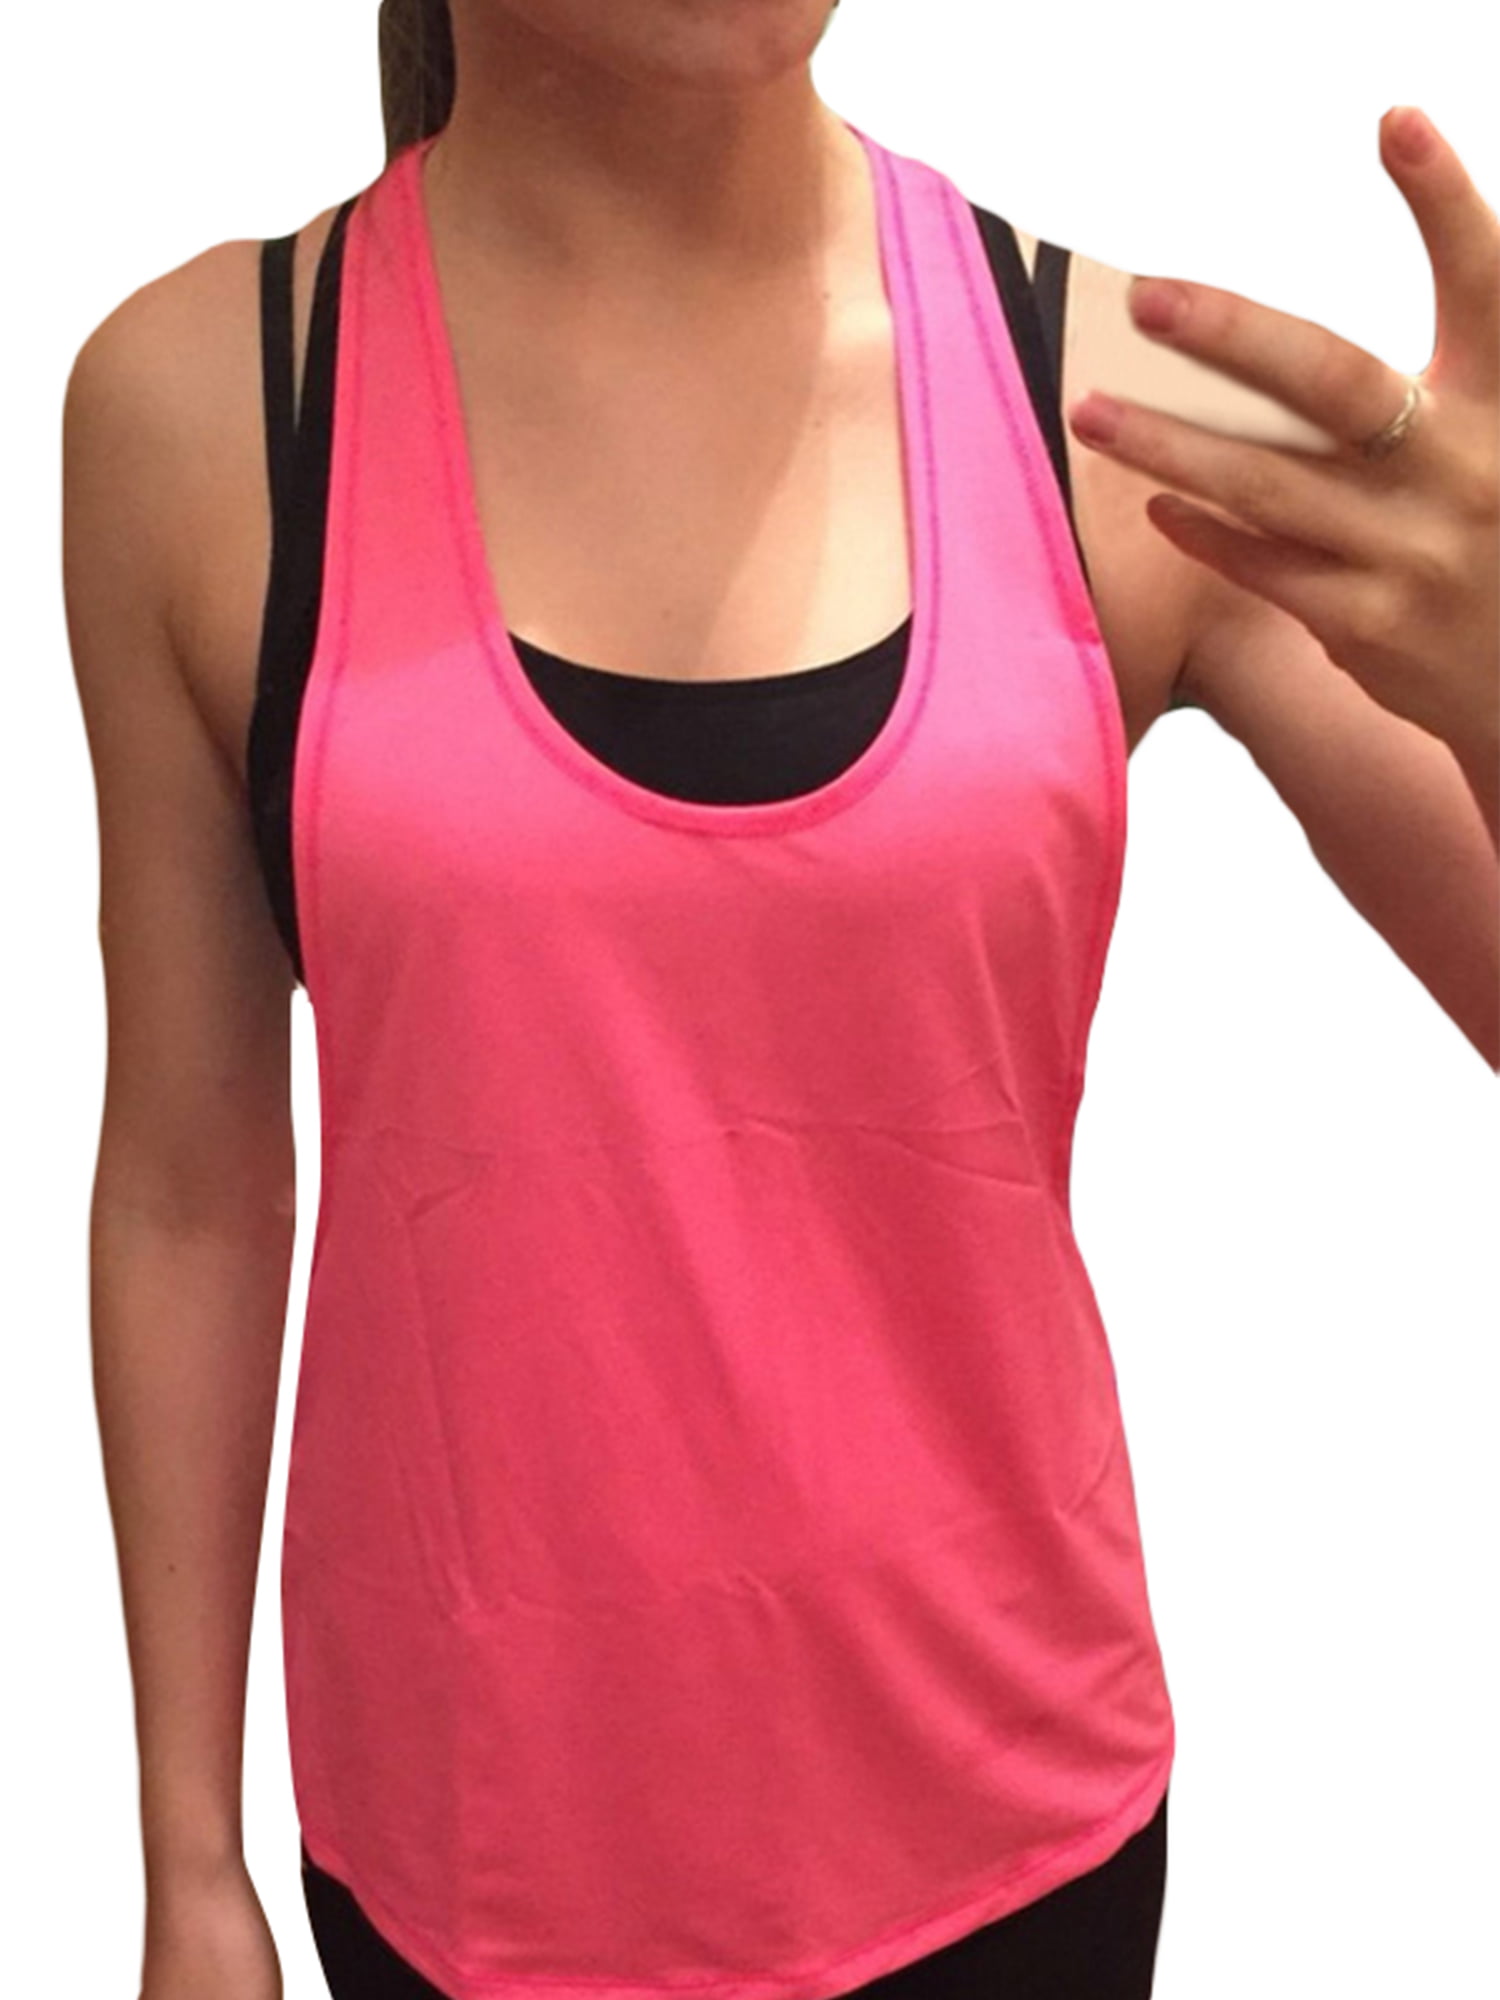 Portazai Women Tank Tops Workout Sports Shirts Backless Sleeveless Blouses Tunics Gym Exercise Athletic Yoga Tops